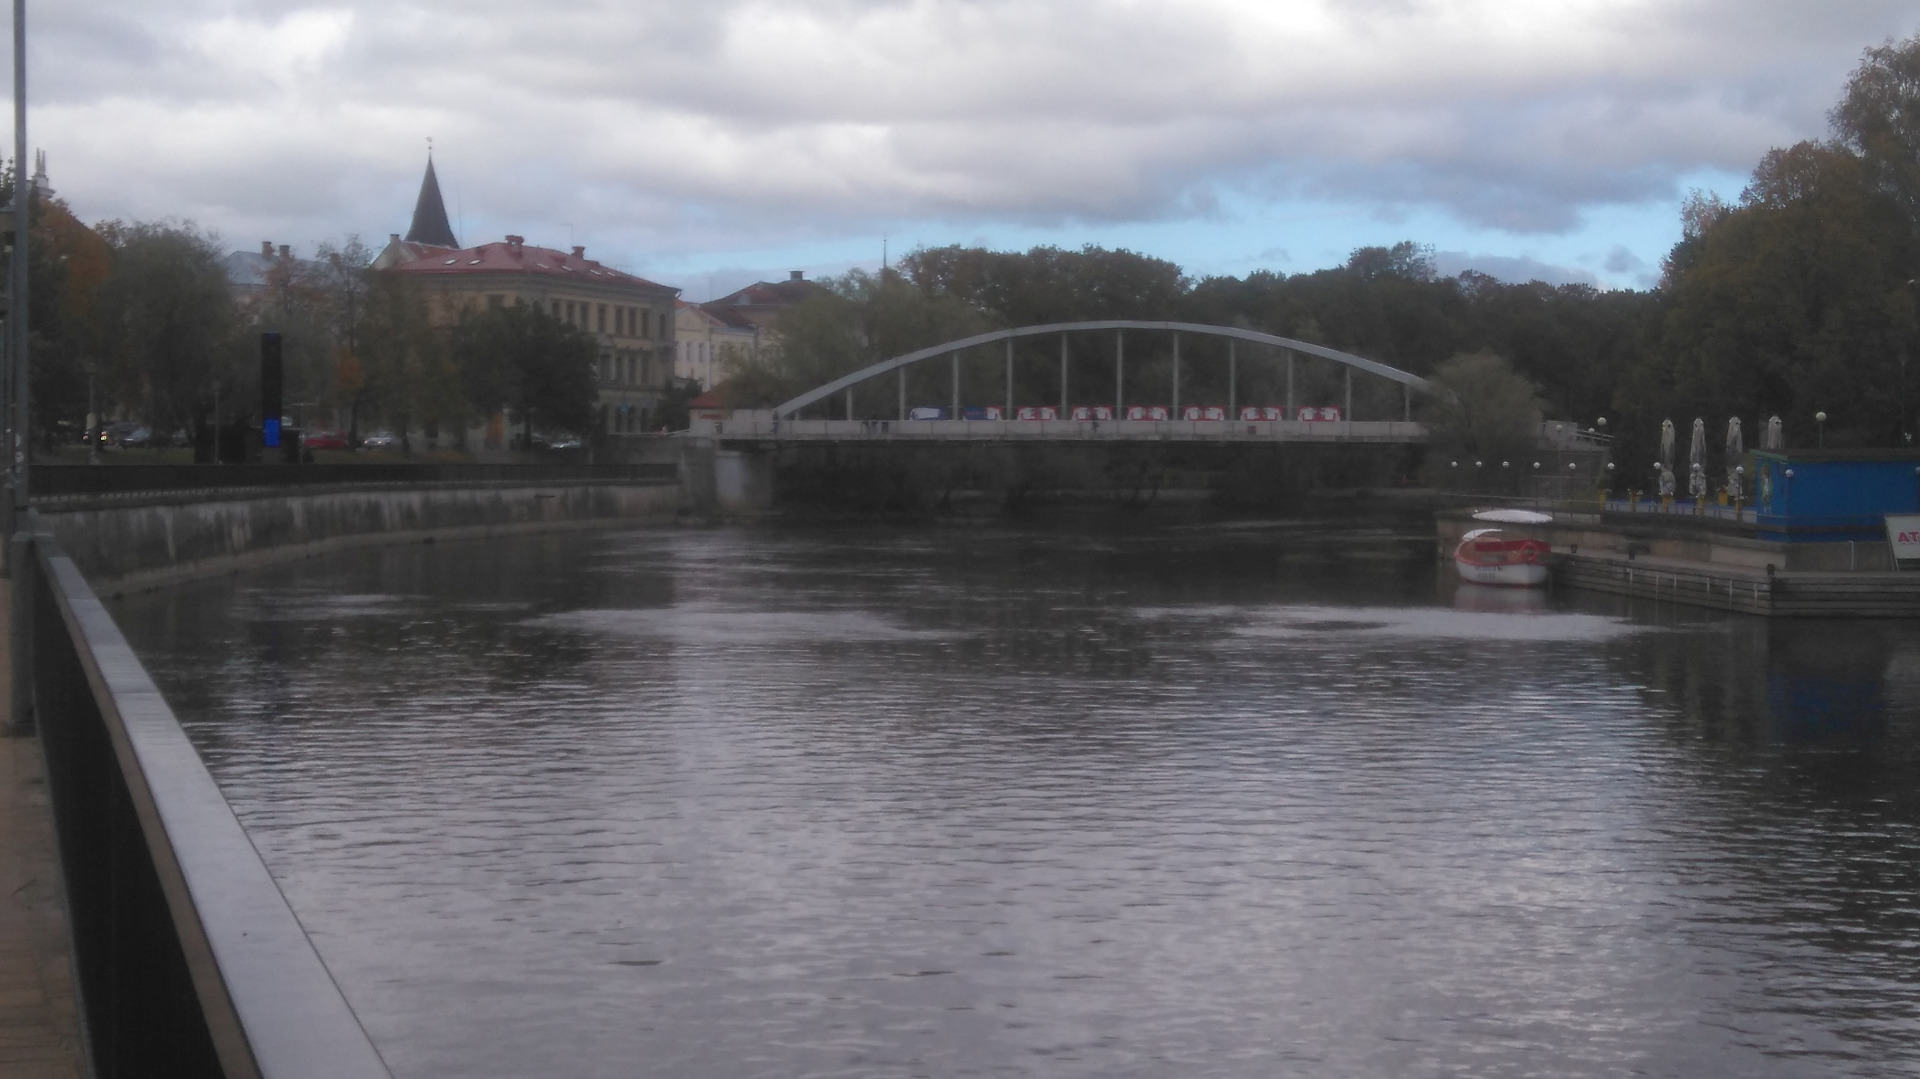 Emajõgi, behind the stone bridge. Tartu rephoto